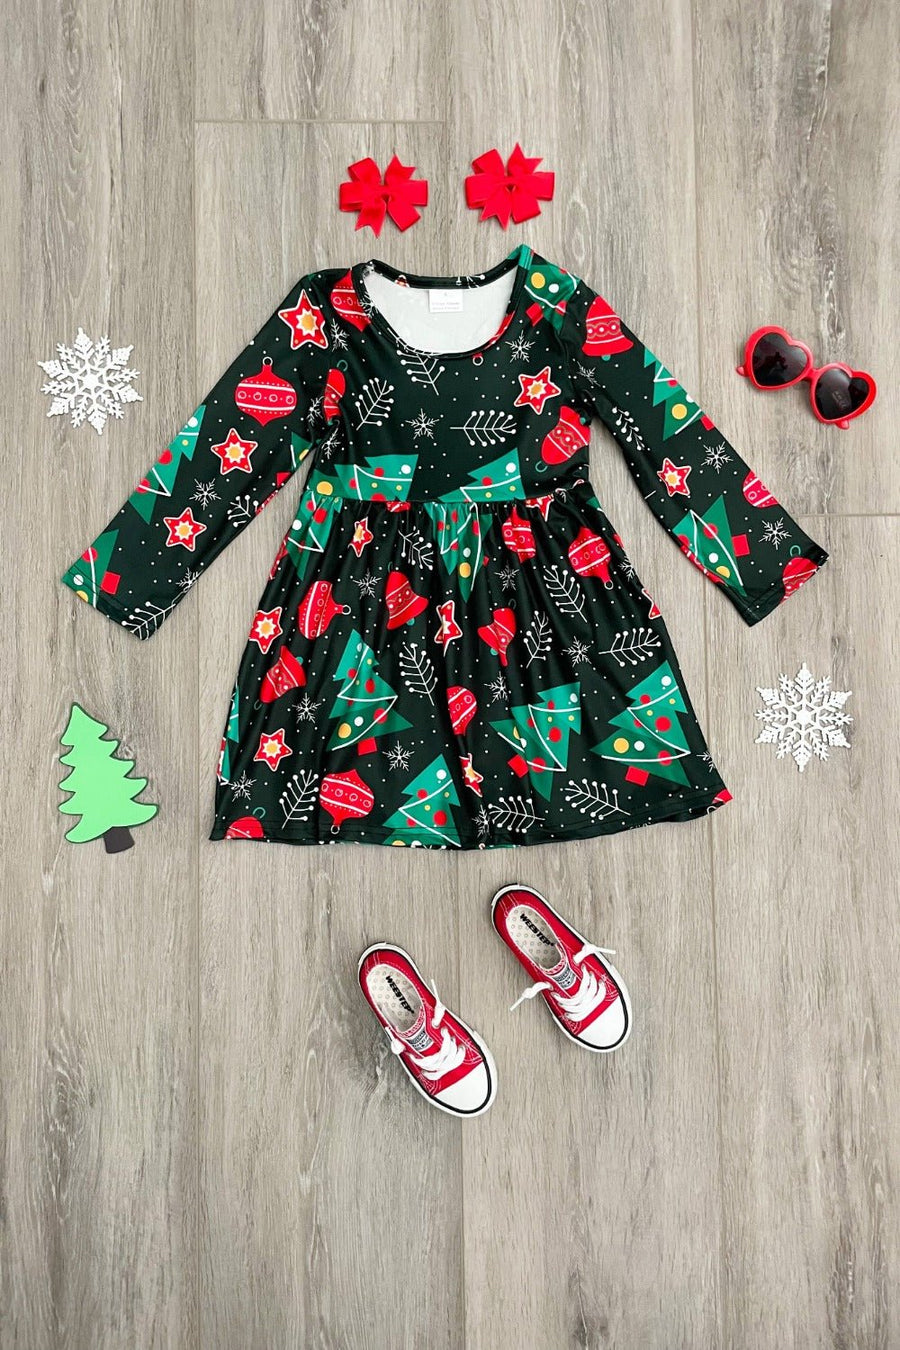 "Holly Jolly Christmas" Boutique Dress - Rylee Faith Designs